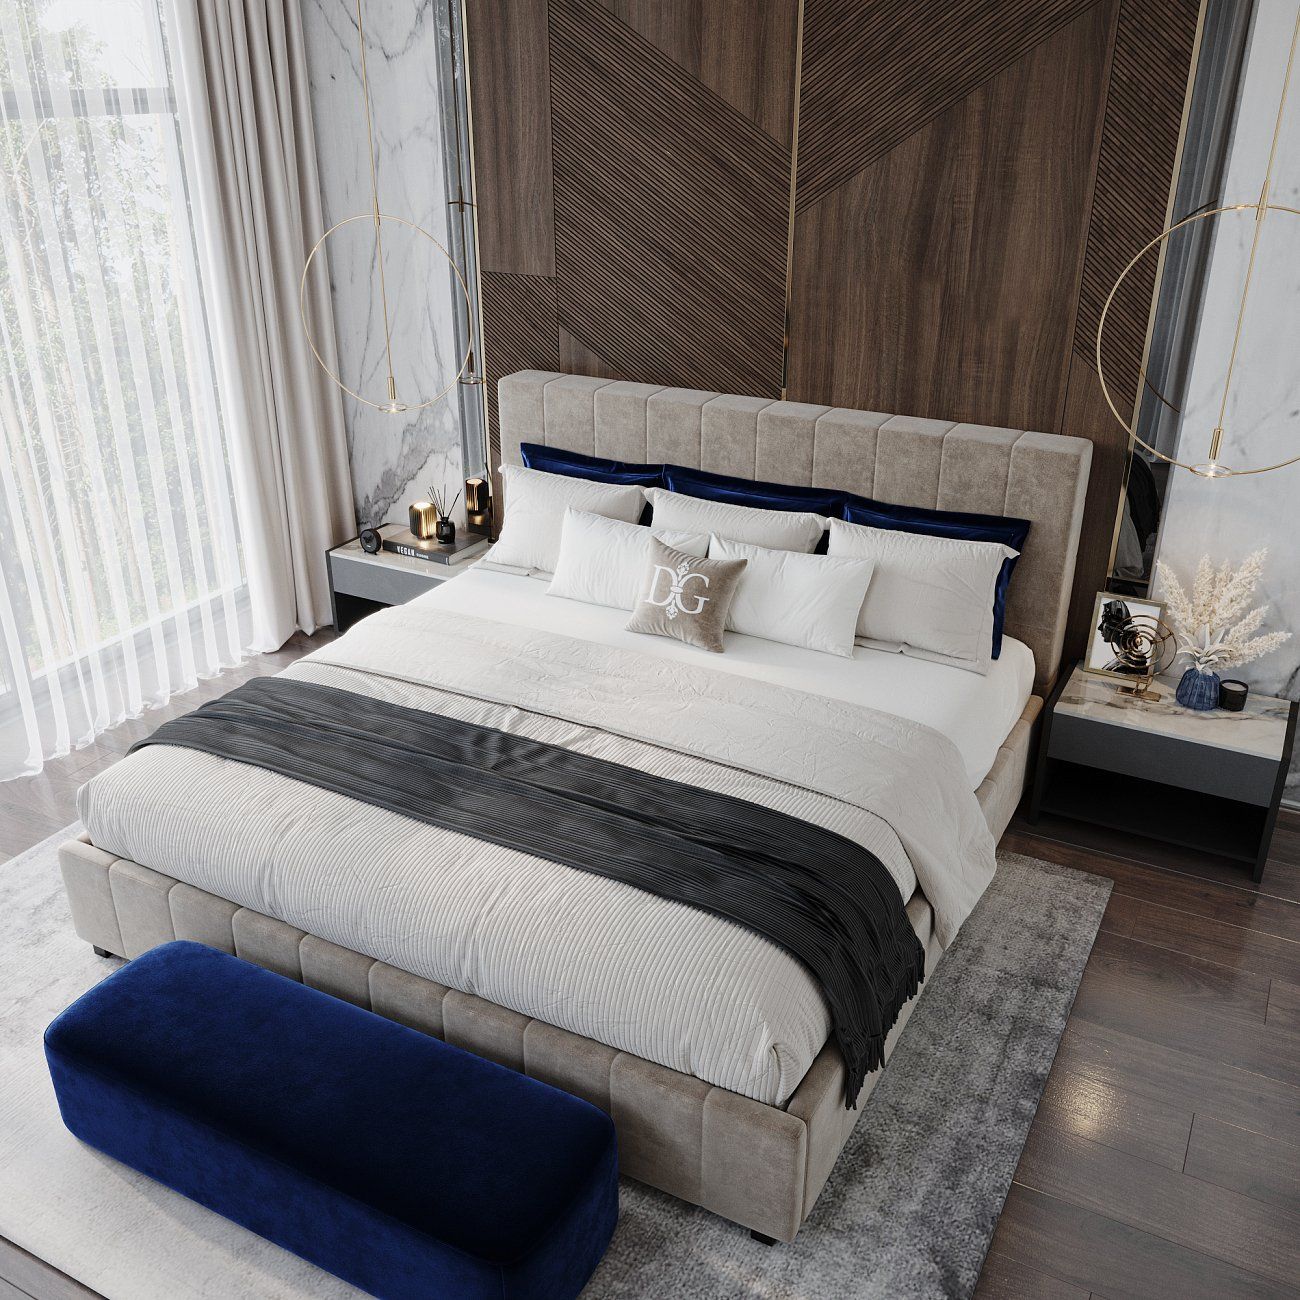 Double bed 160x200 cm blue Shining Modern